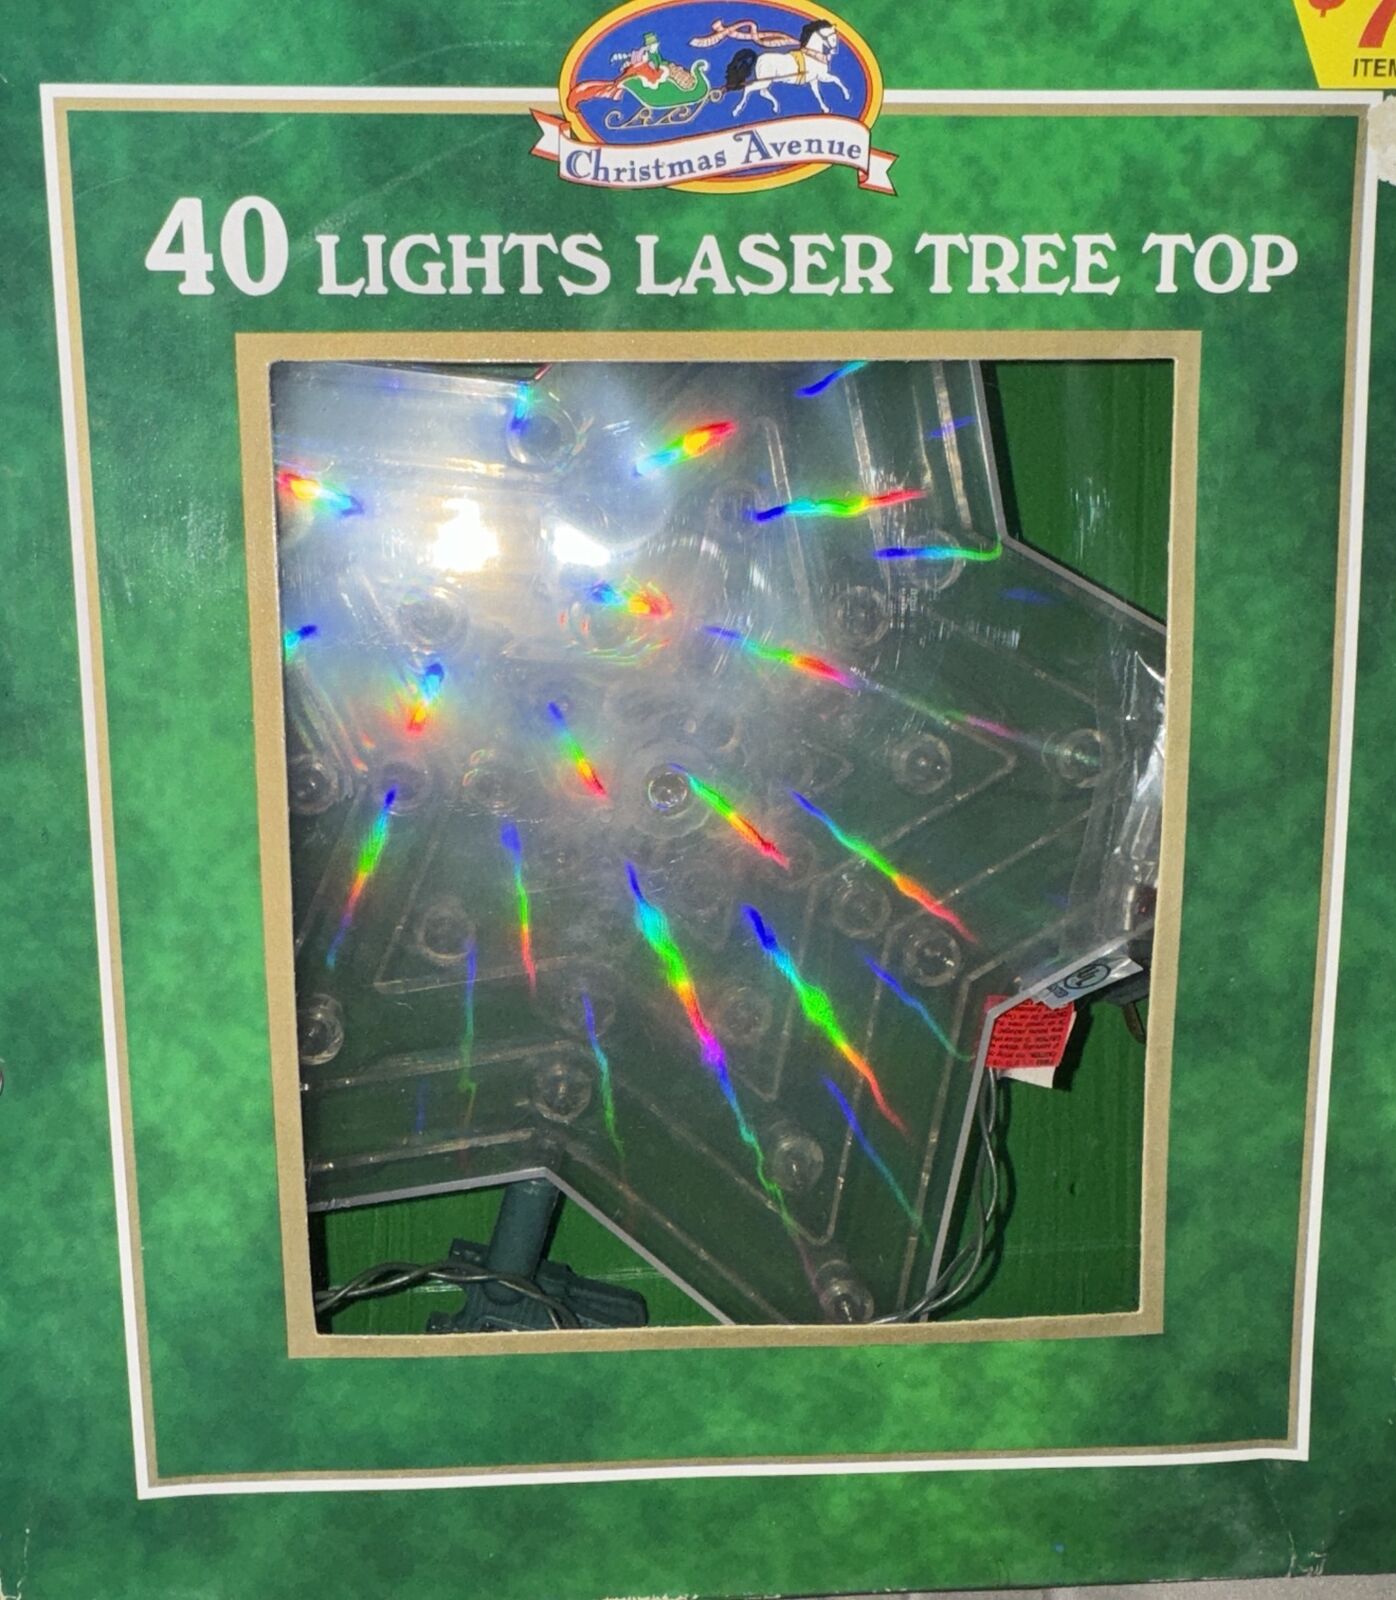 Vintage Star 40 Lights Laser Tree Top Christmas Avenue in Box